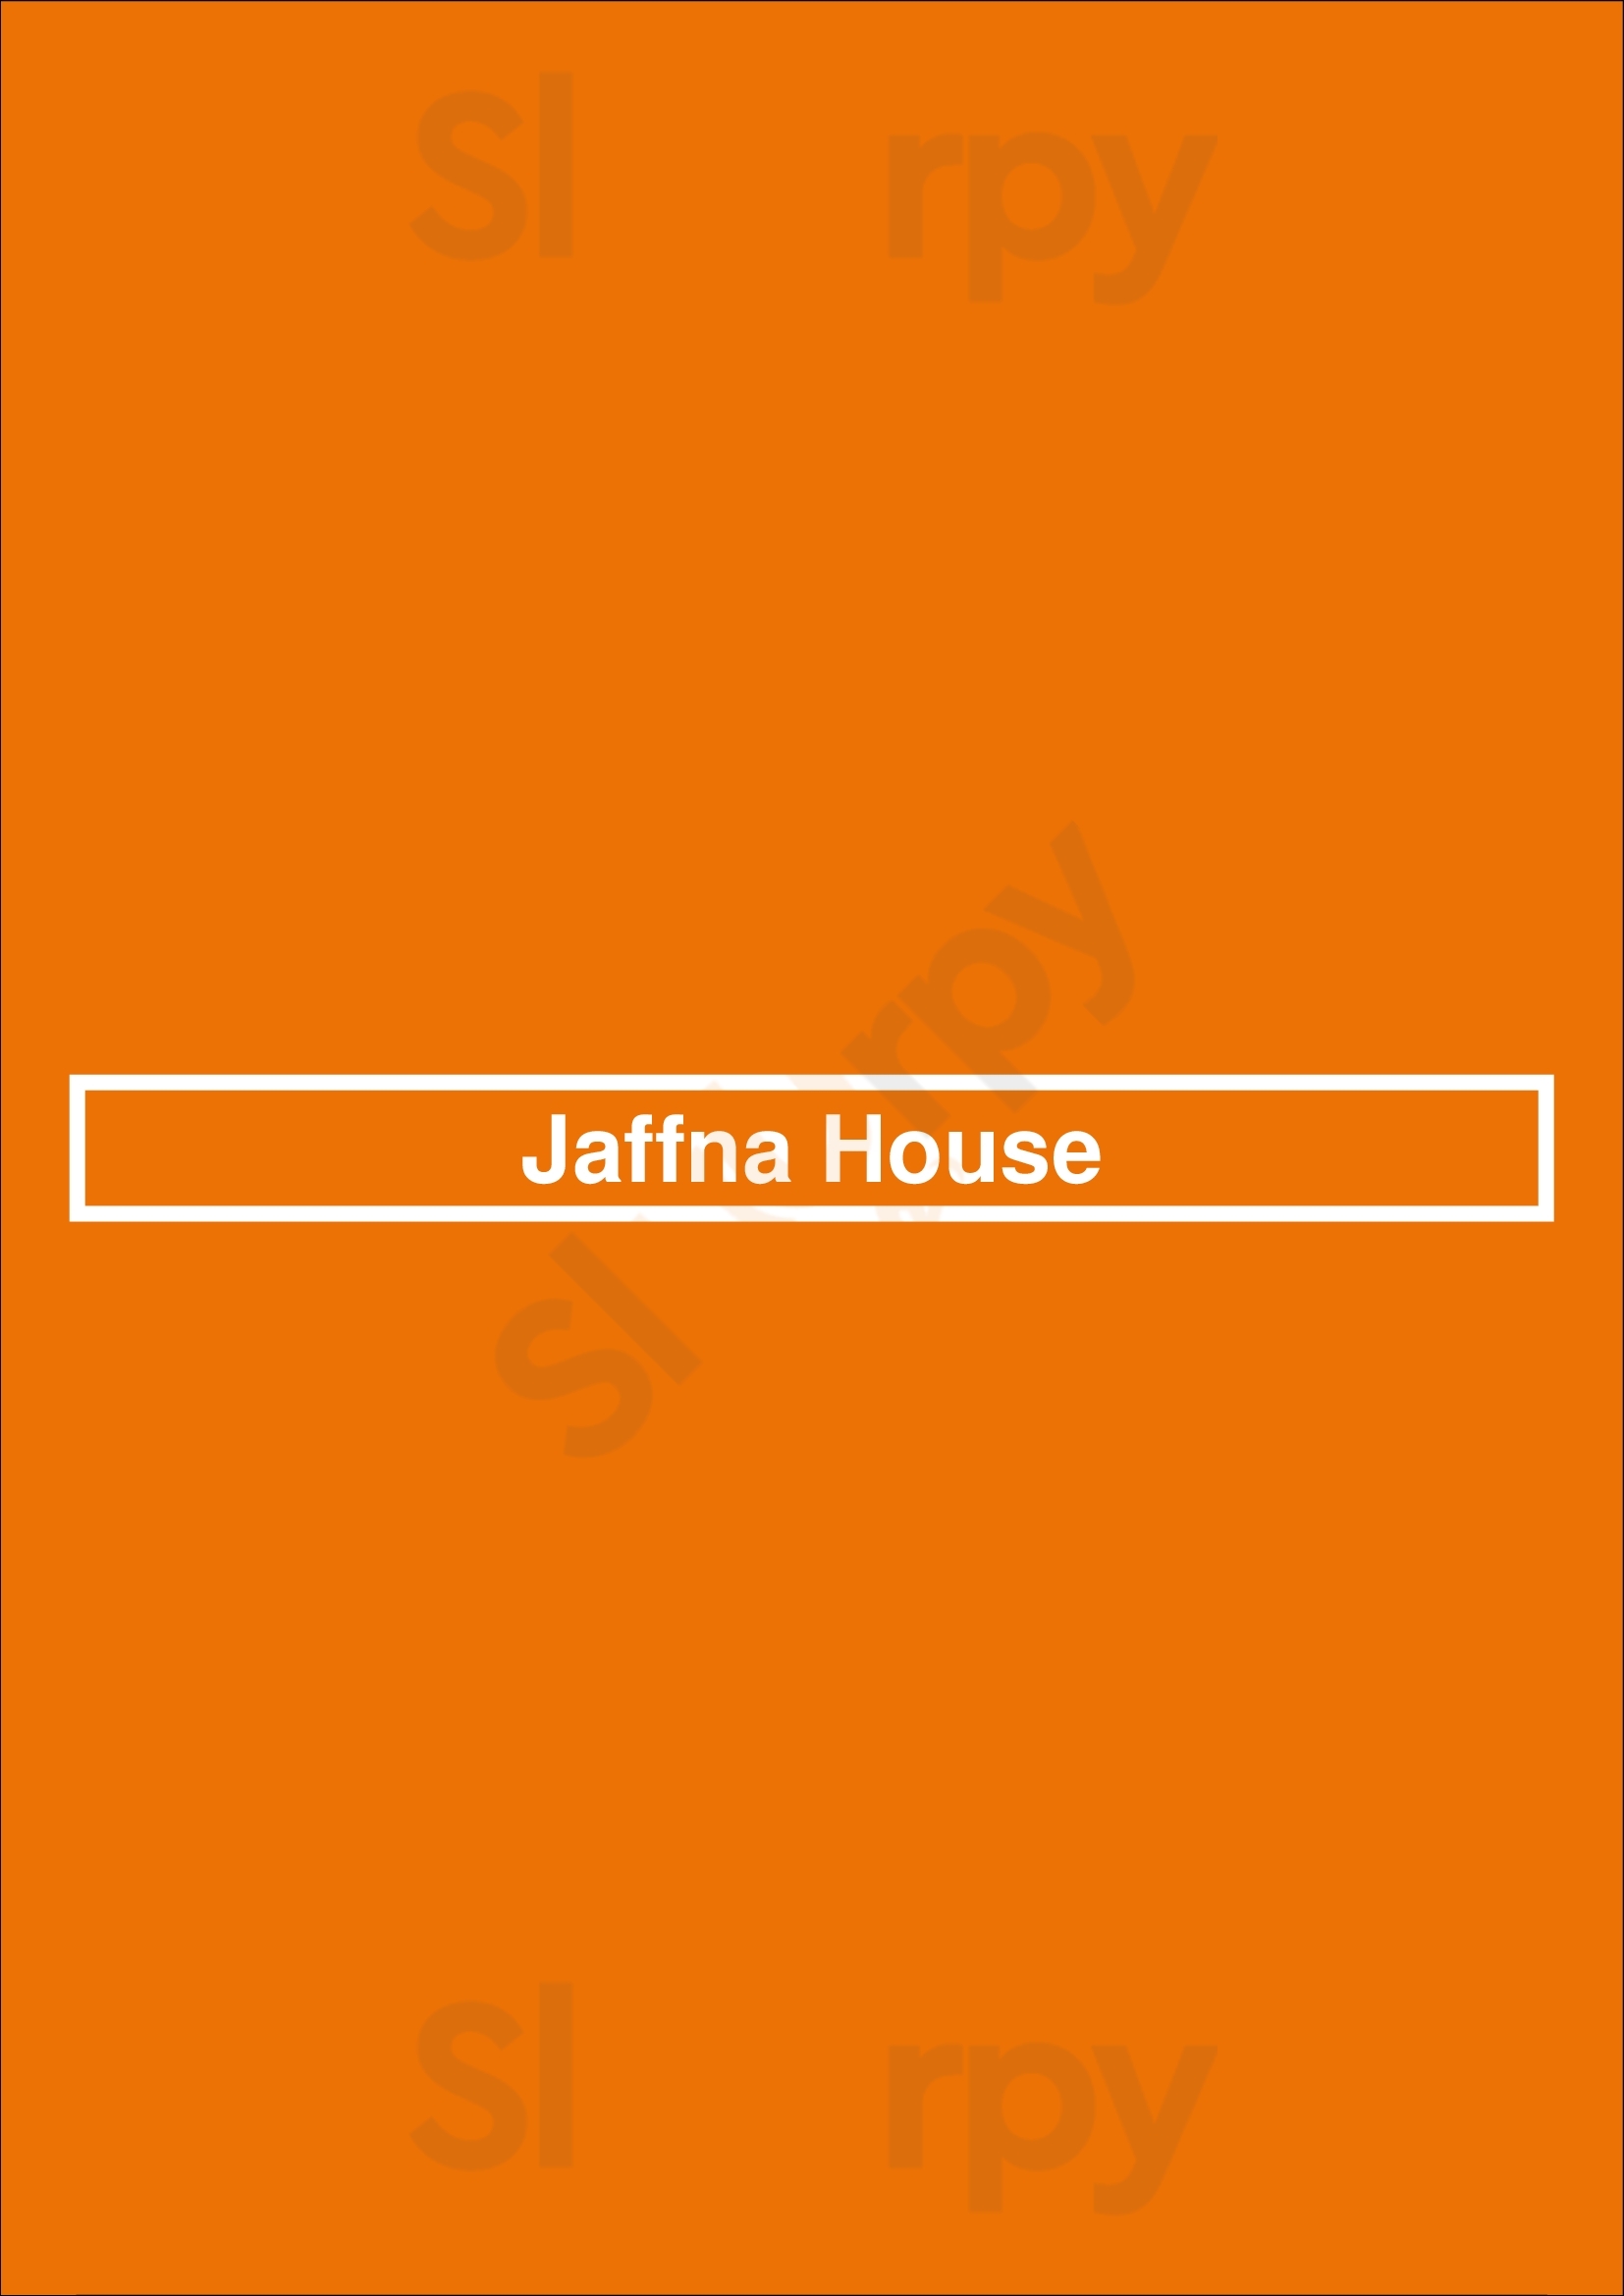 Jaffna House London Menu - 1